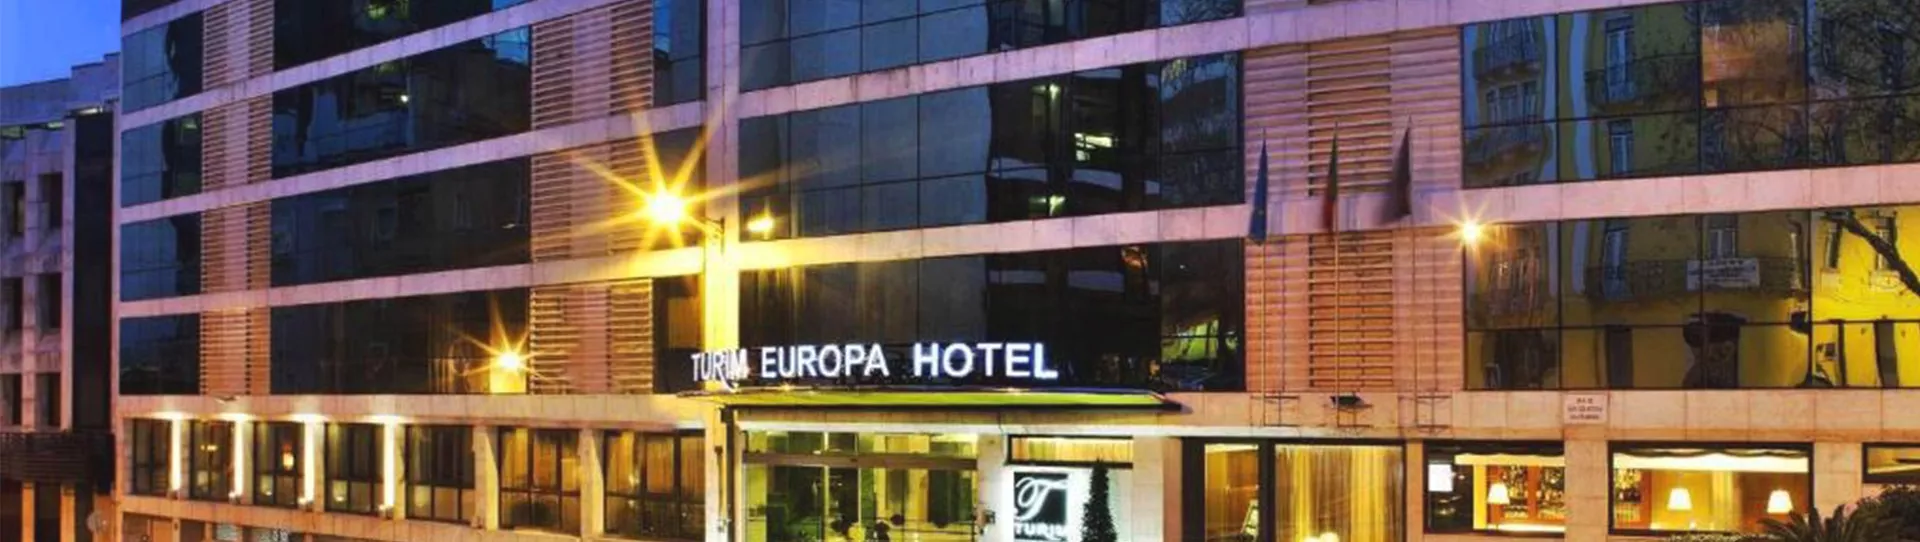 Portugal golf holidays - Turim Europa Hotel - Photo 1